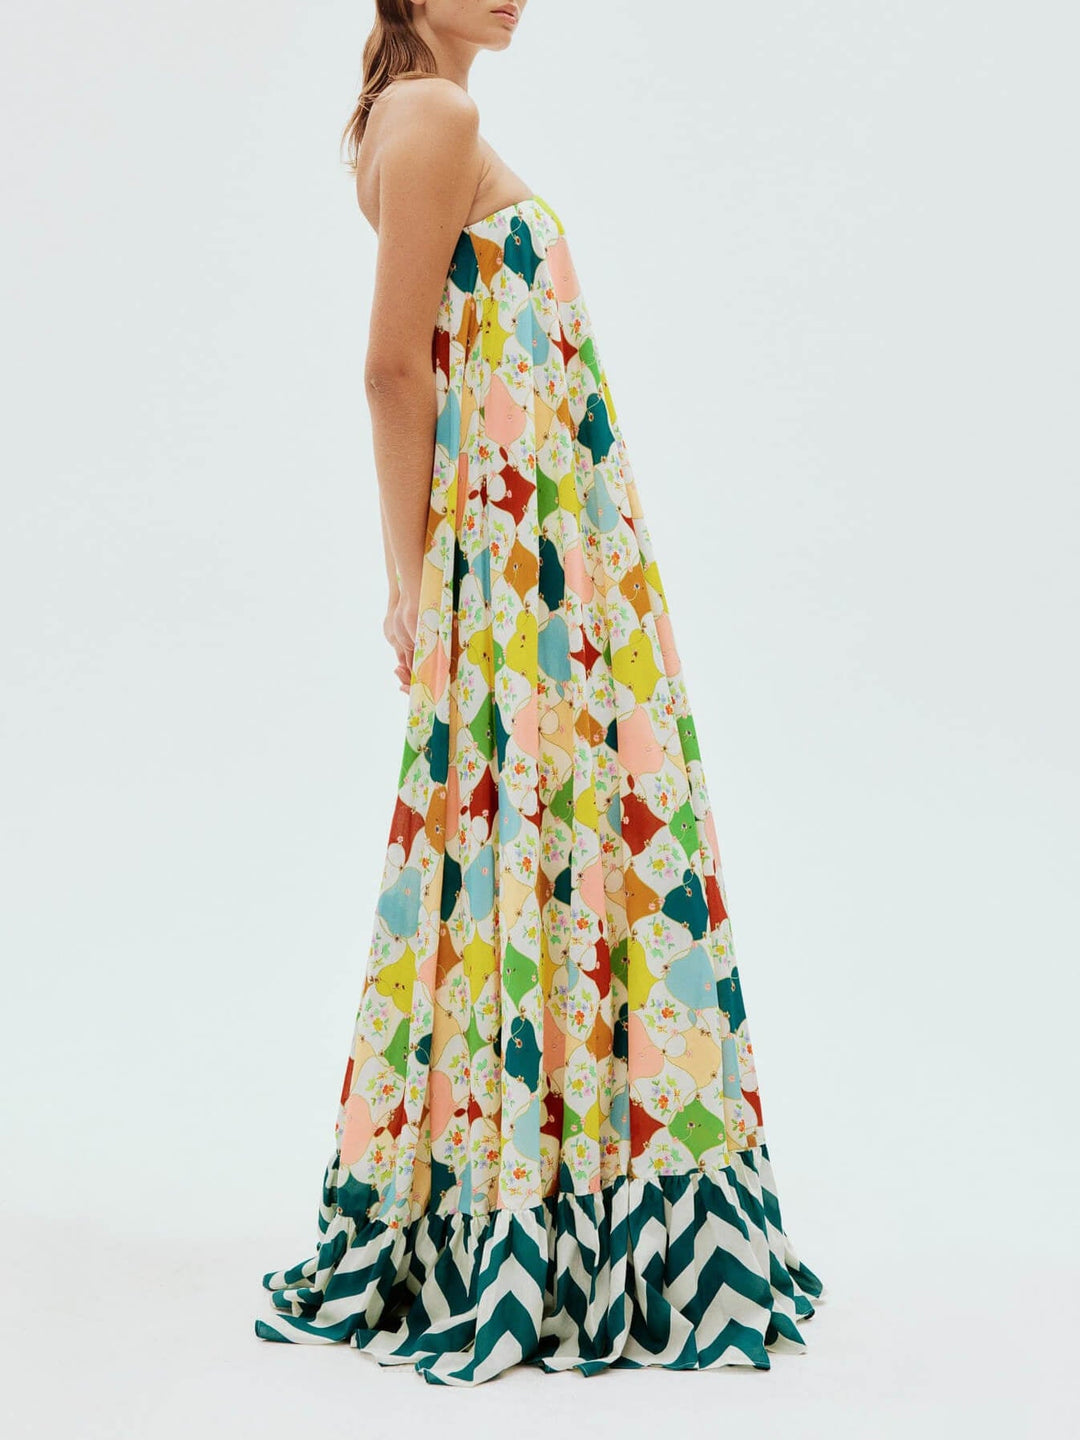 Unique Print Contrast Sleeveless Off-The-Shoulder Maxi Dress